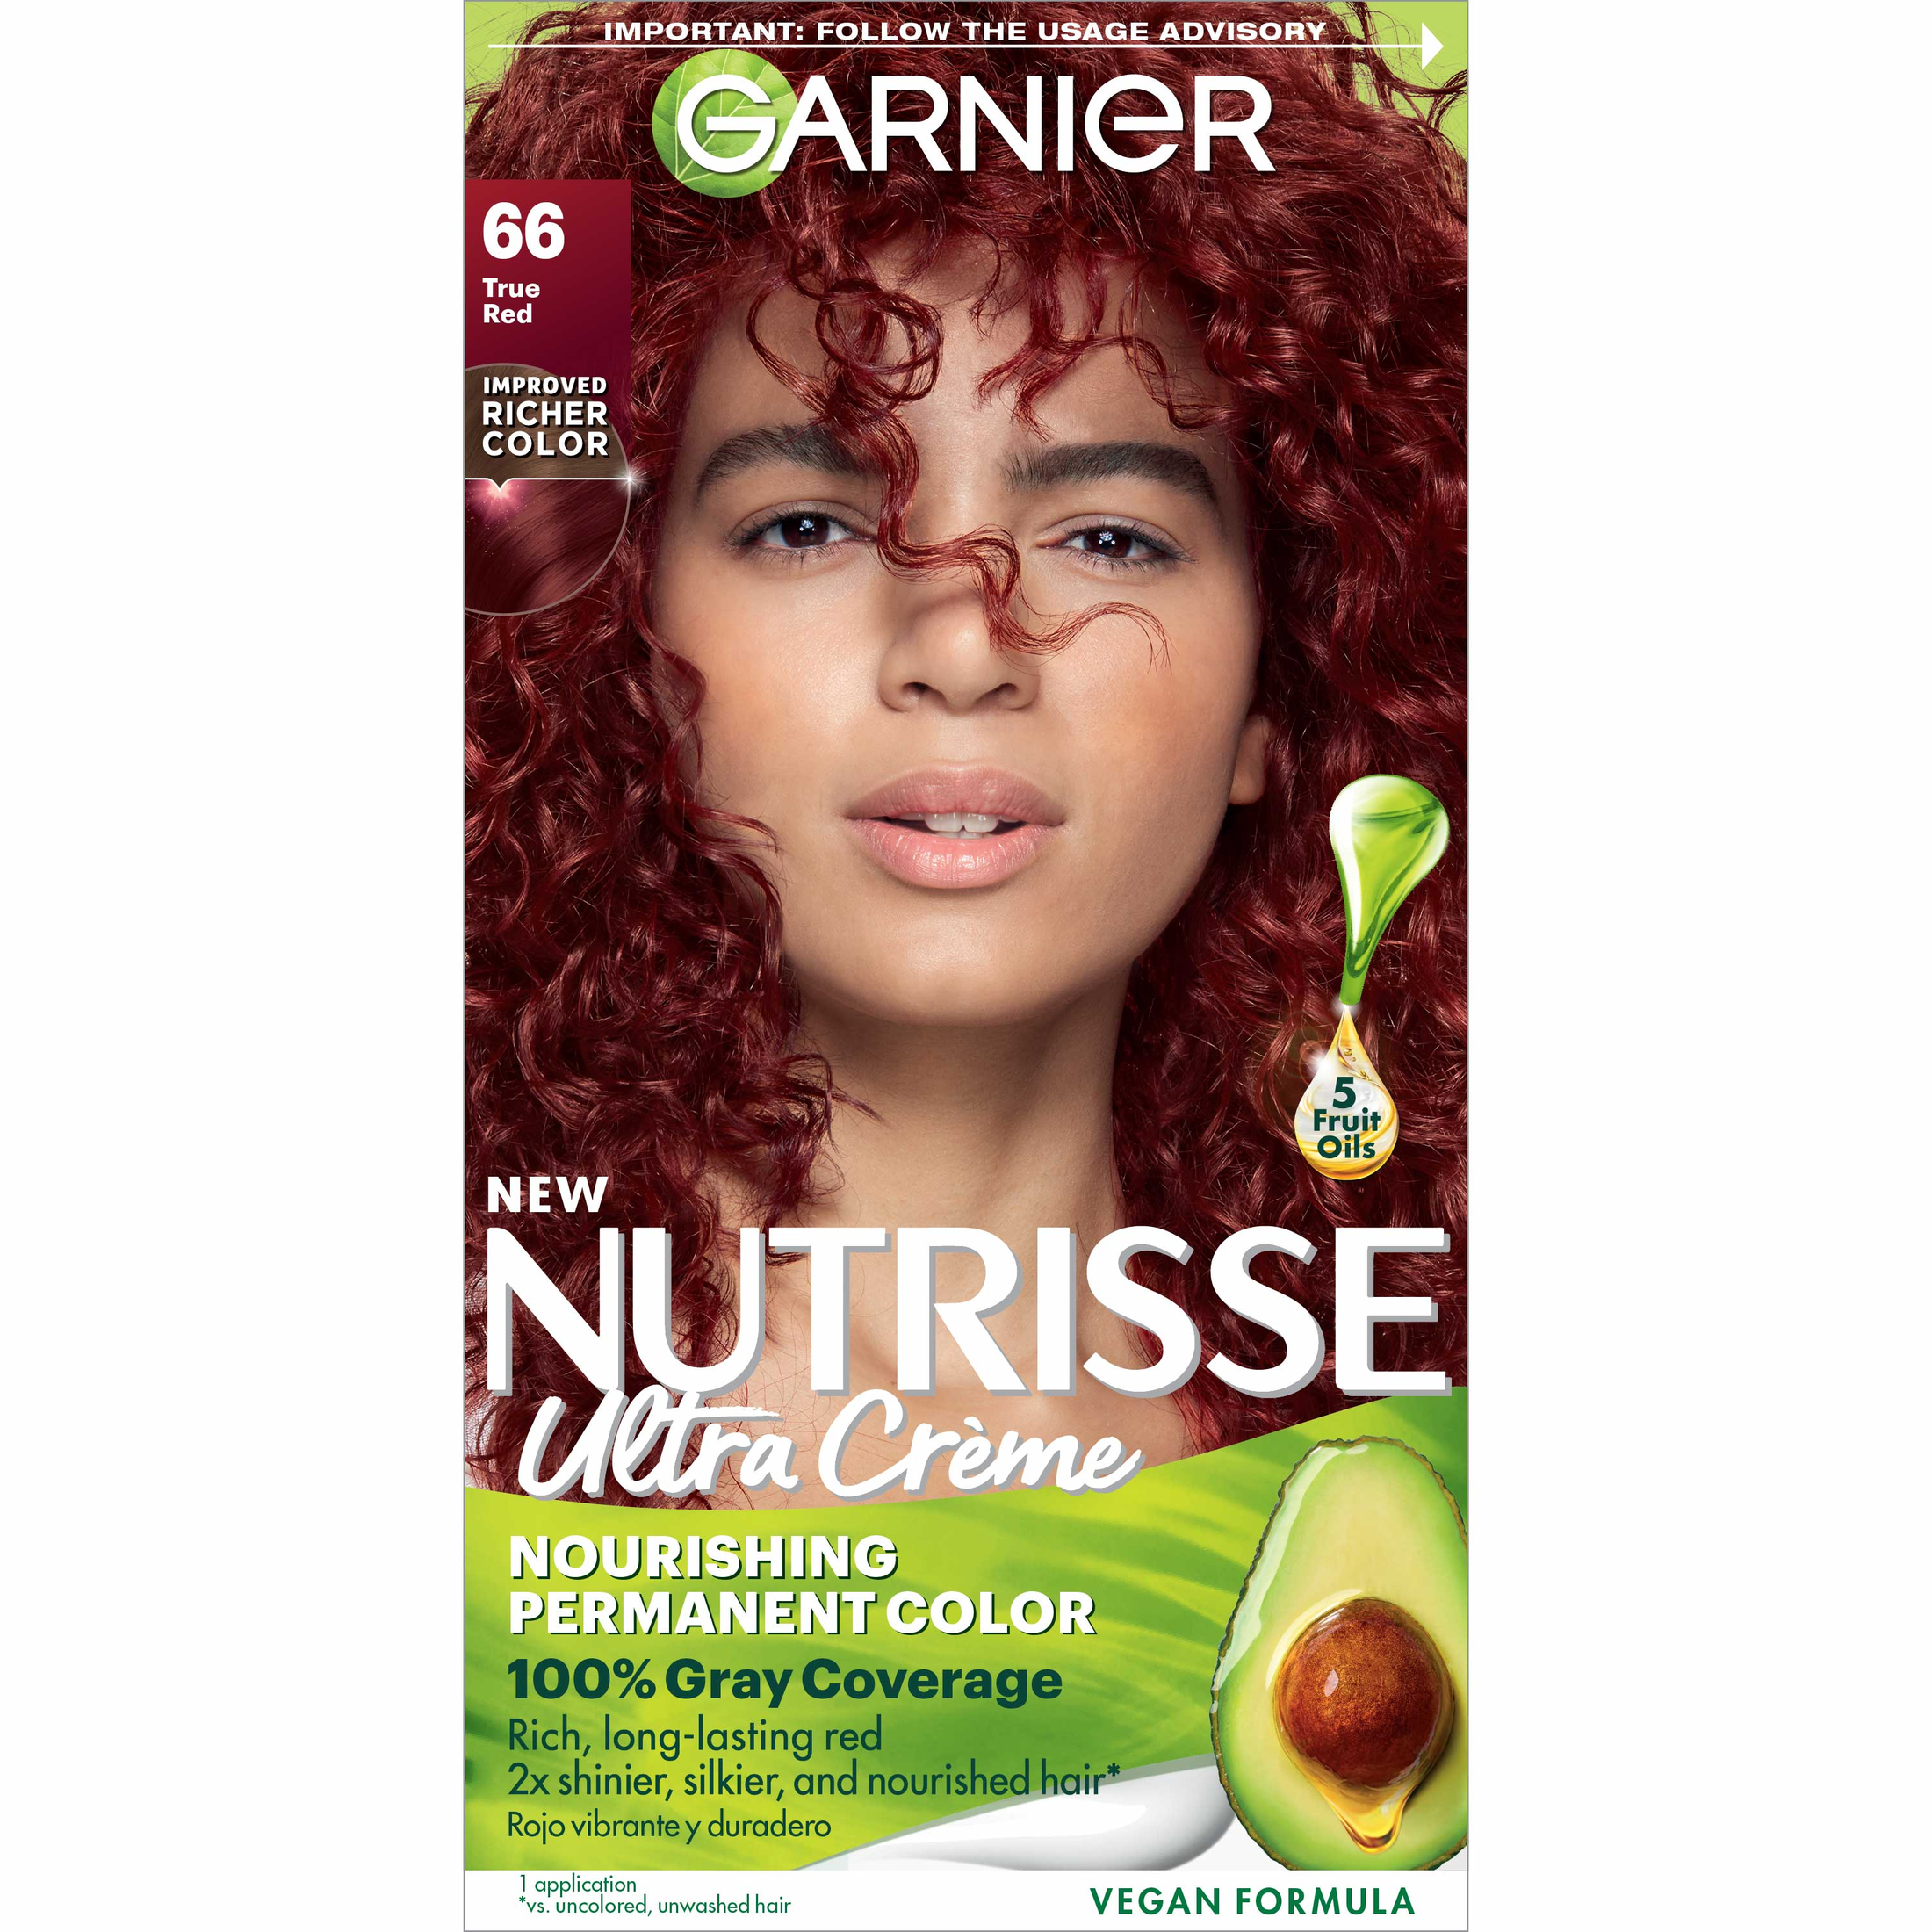 Garnier Nutrisse Nourishing Hair Color Creme, 066 True Red Pomegranate - image 1 of 11